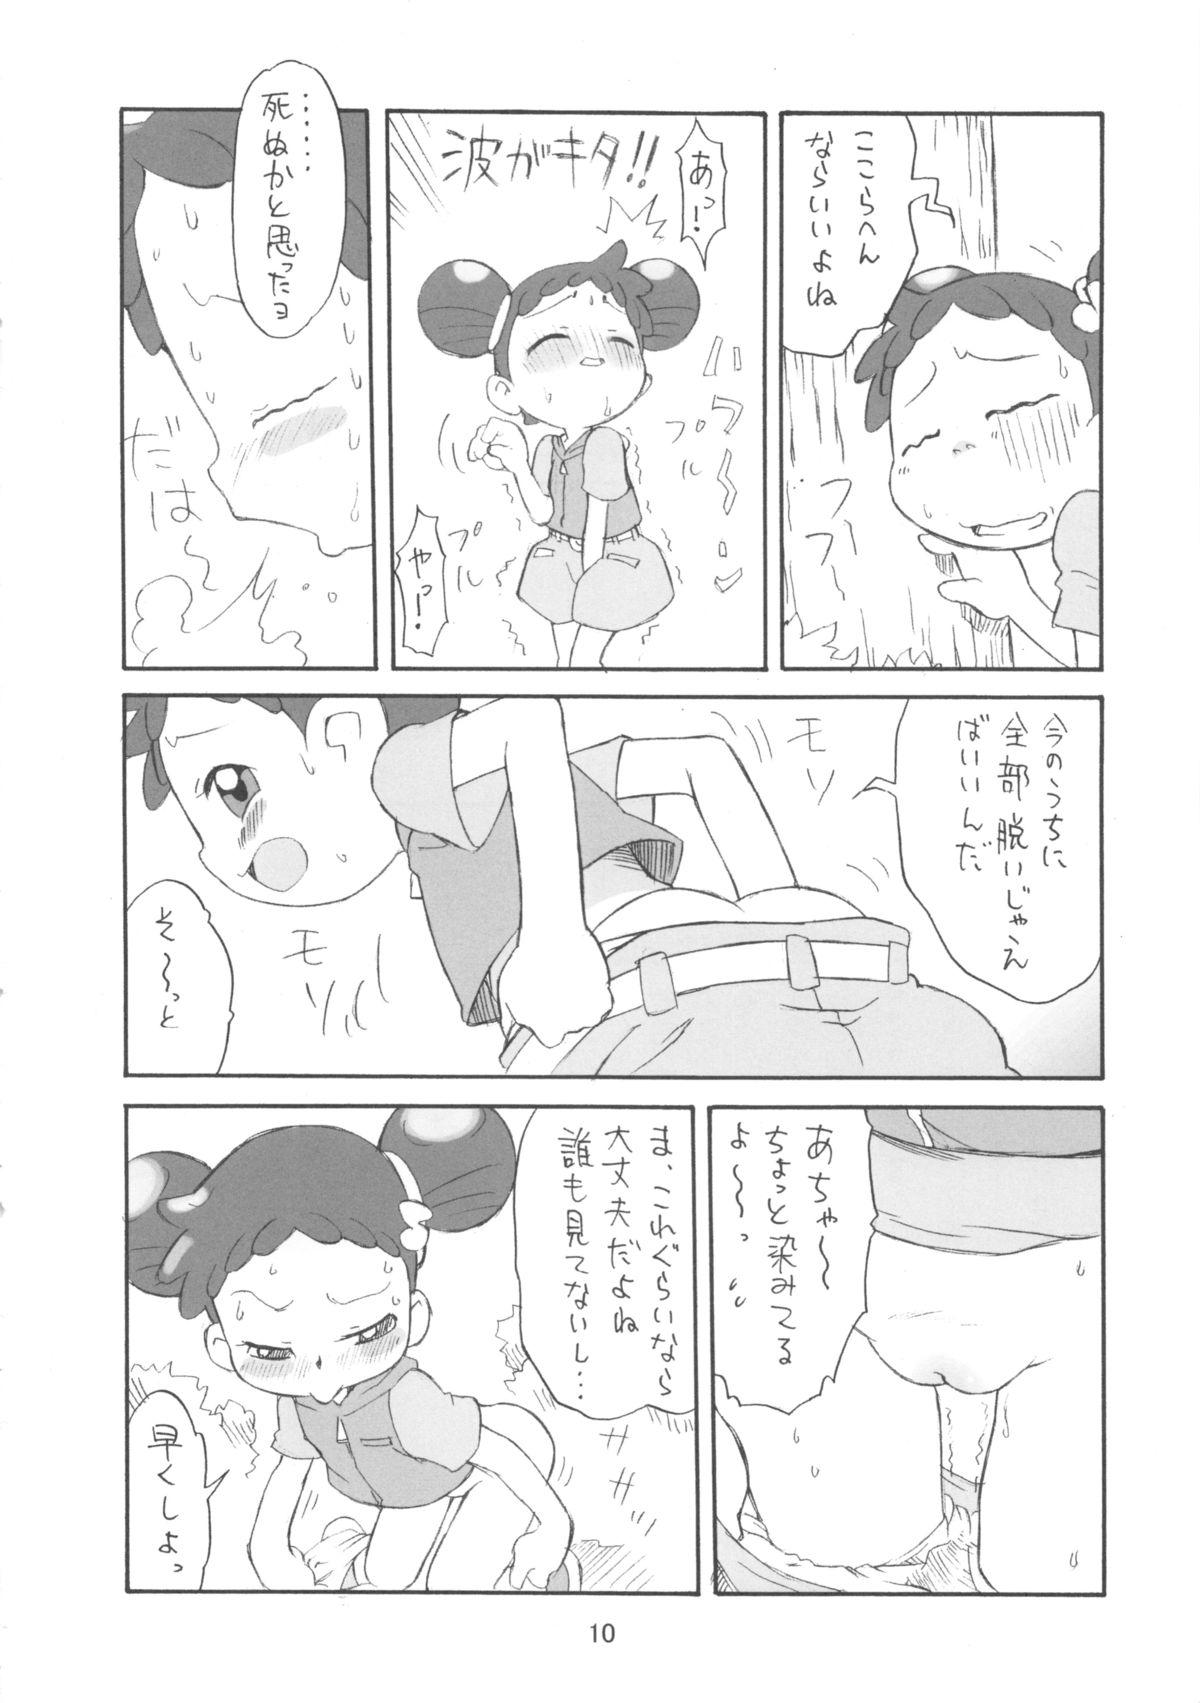 Morrita Pipipupu Fukkoku Ban - Ojamajo doremi Squirters - Page 10